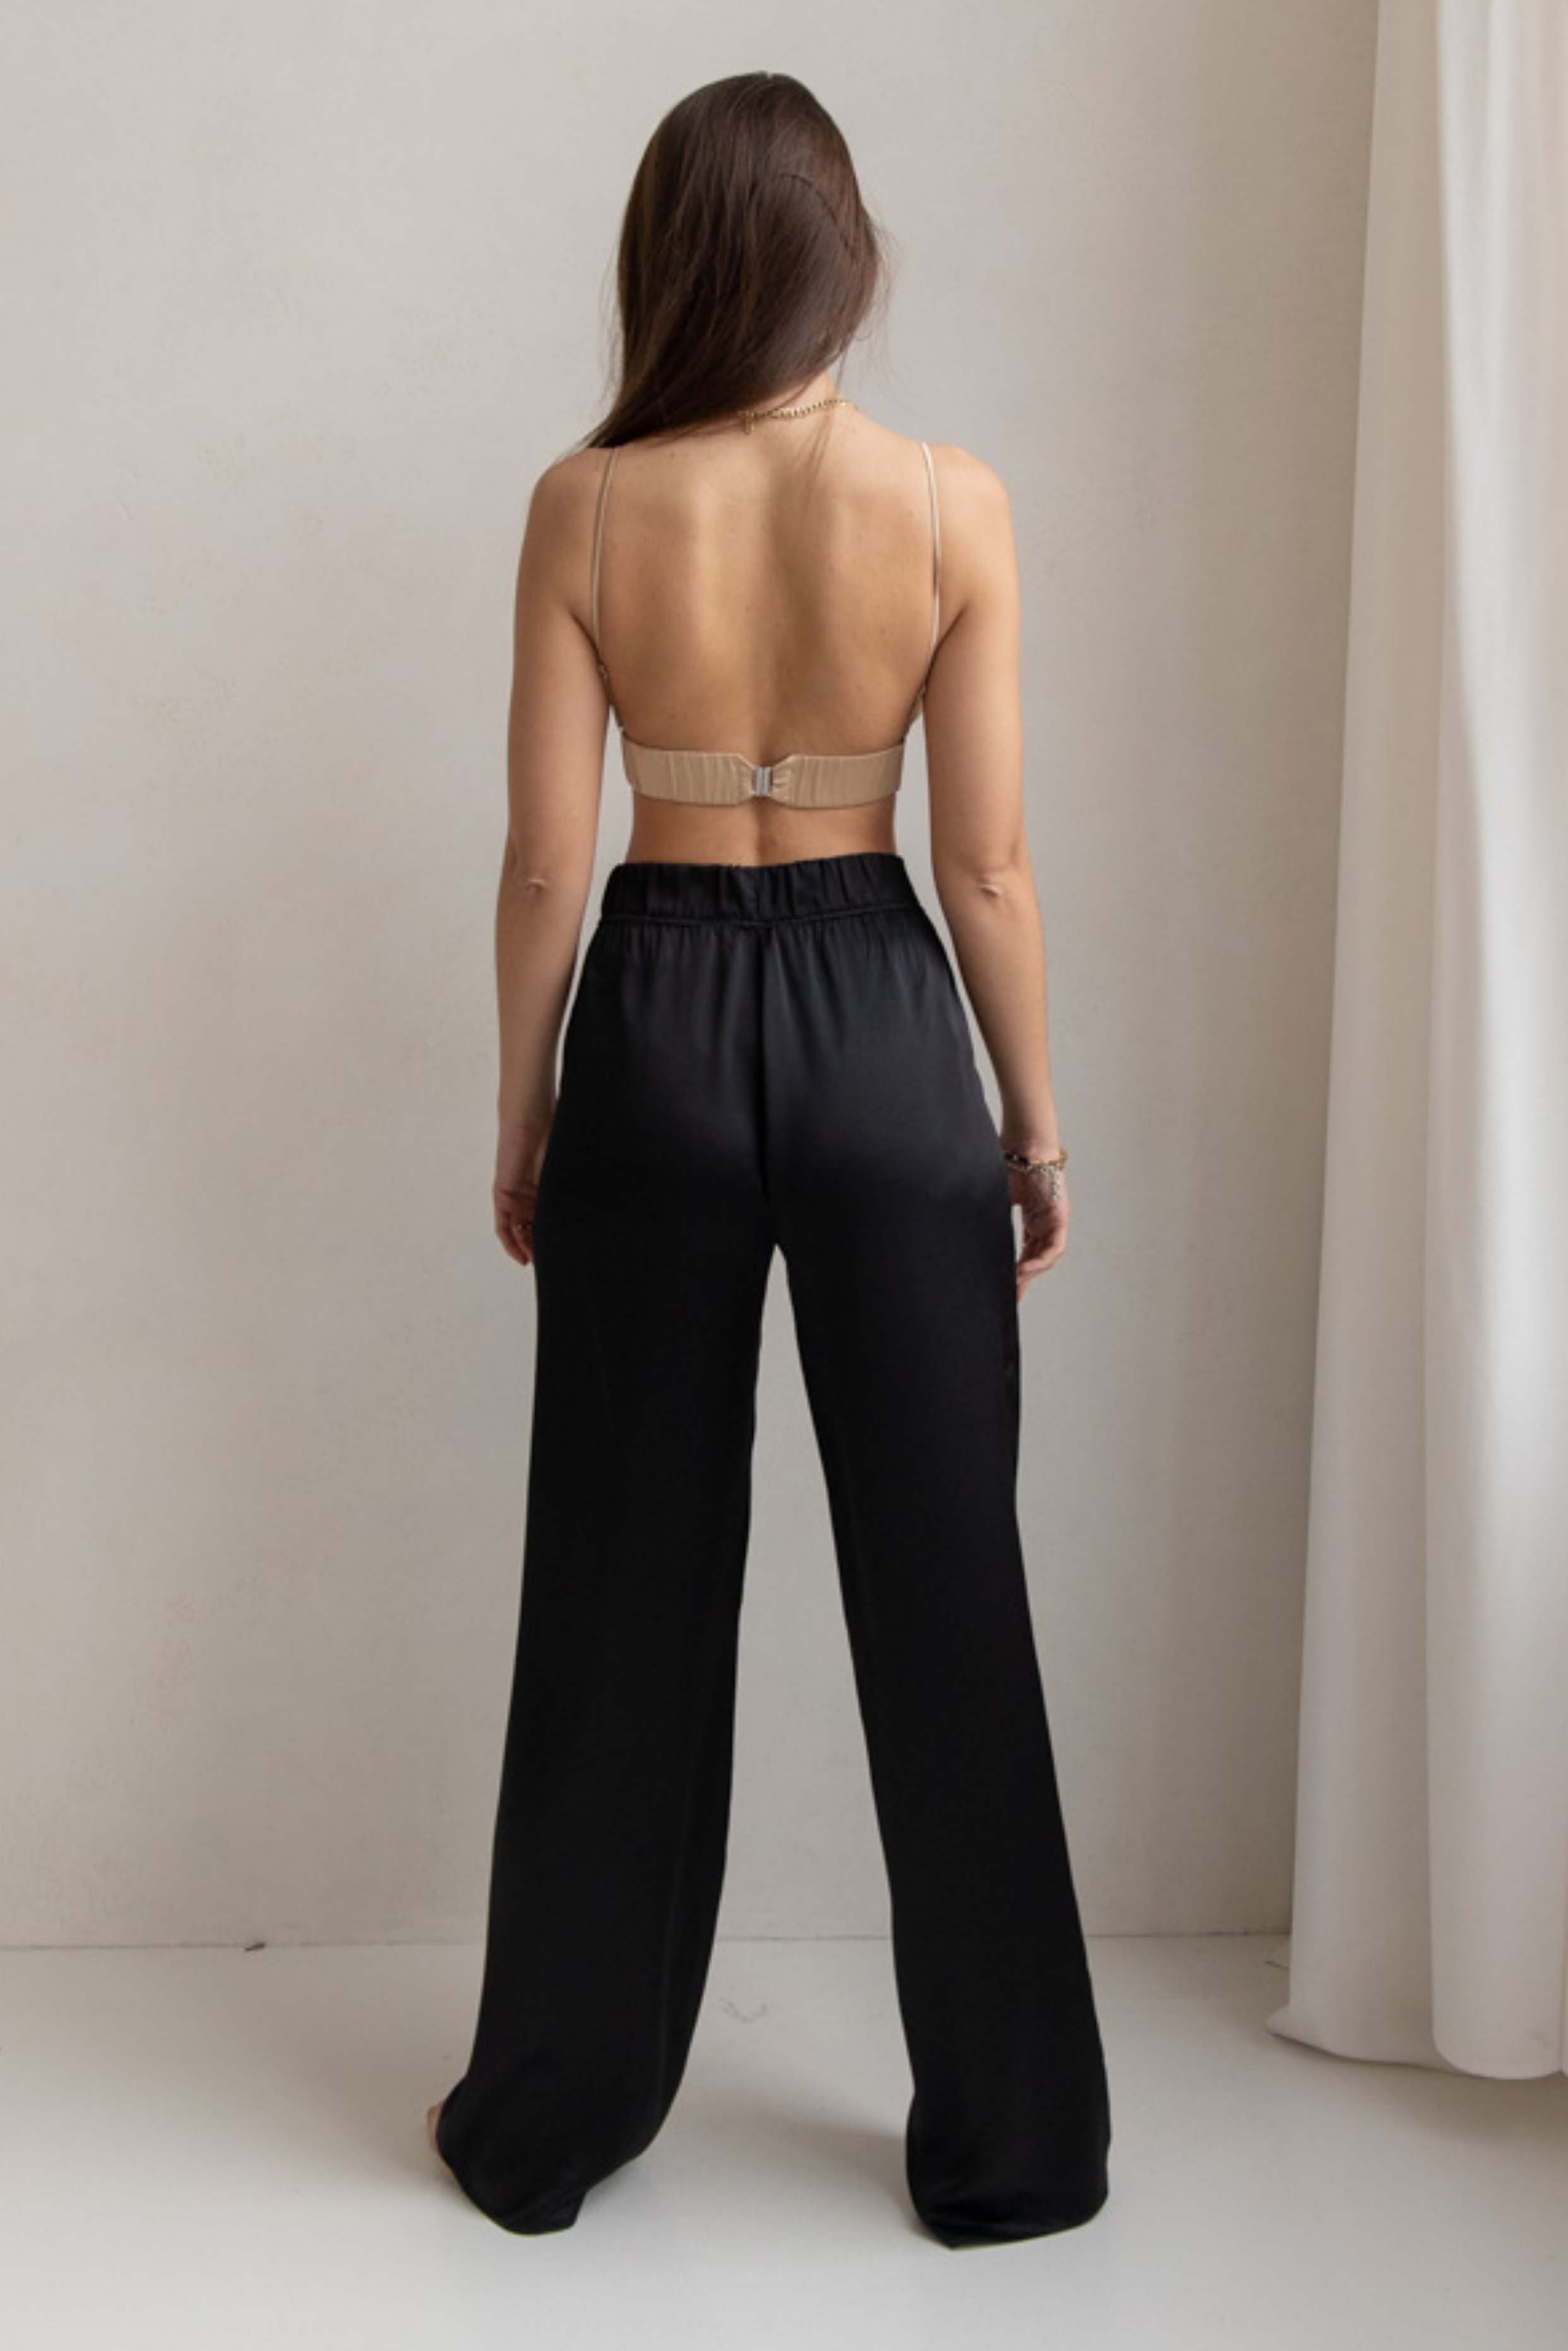 Buy SriSaras Women's Regular Fit Silk Gold Border Pants/Trousers (L, Black)  at Amazon.in